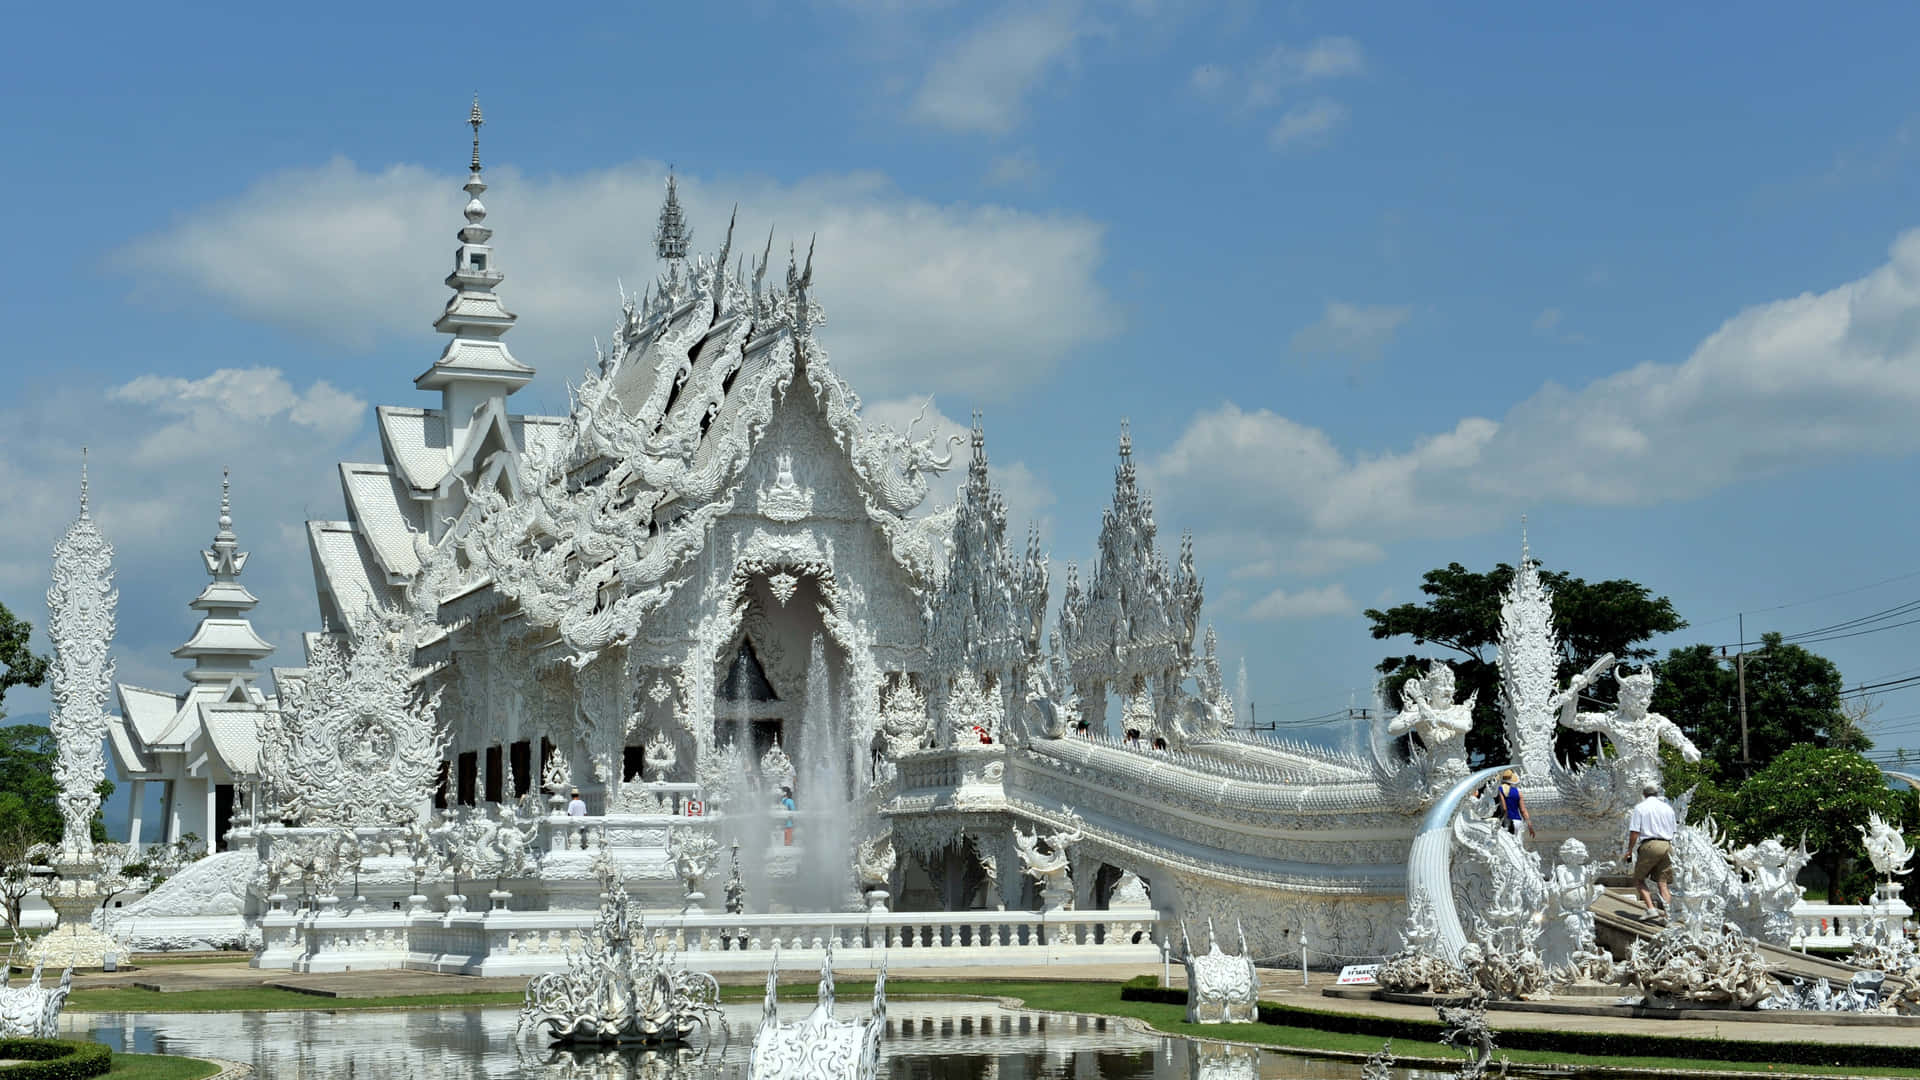 White Temple In Chiang Rai Agaianst A Beautiful Sky Wallpaper